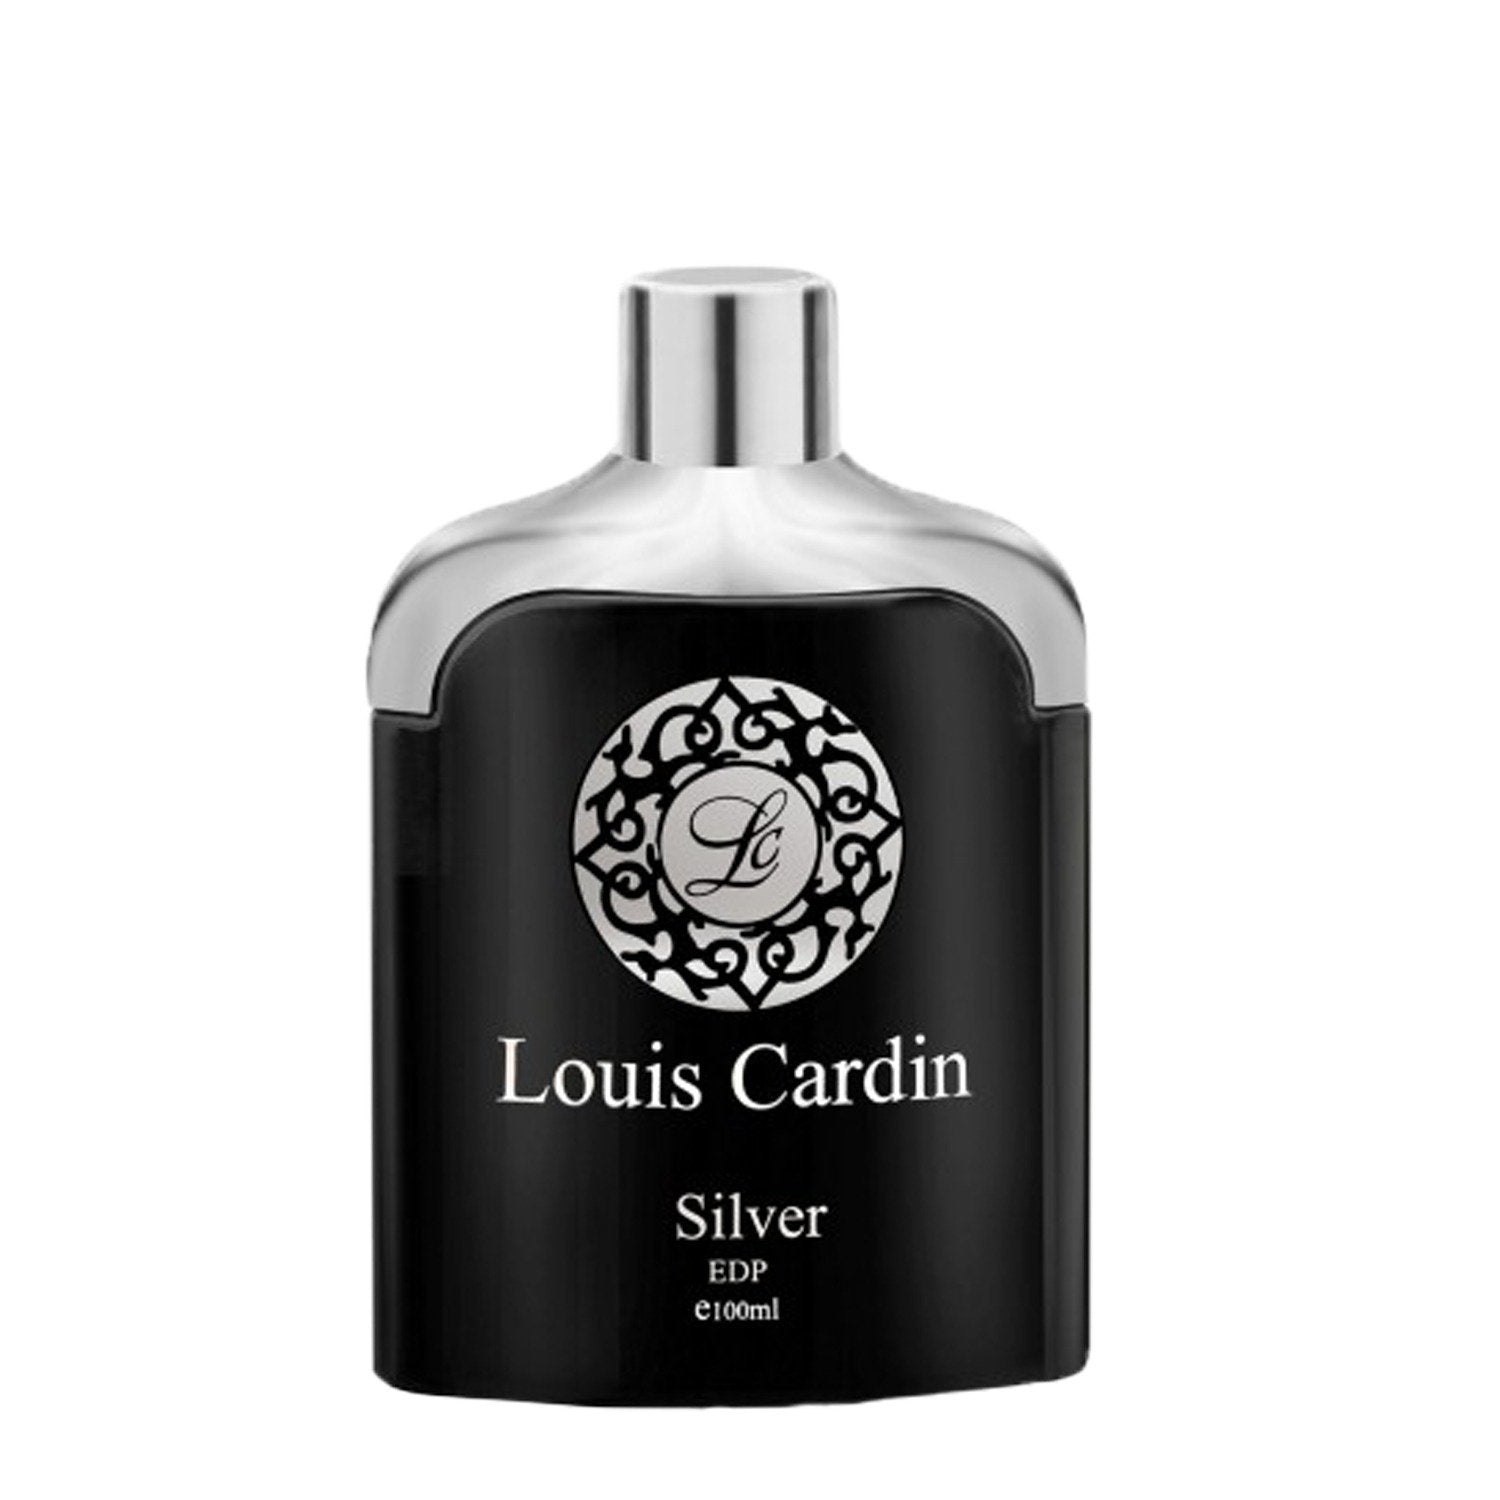 Louis Cardin Silver 100ml - Eau De Perfume – Louis Cardin